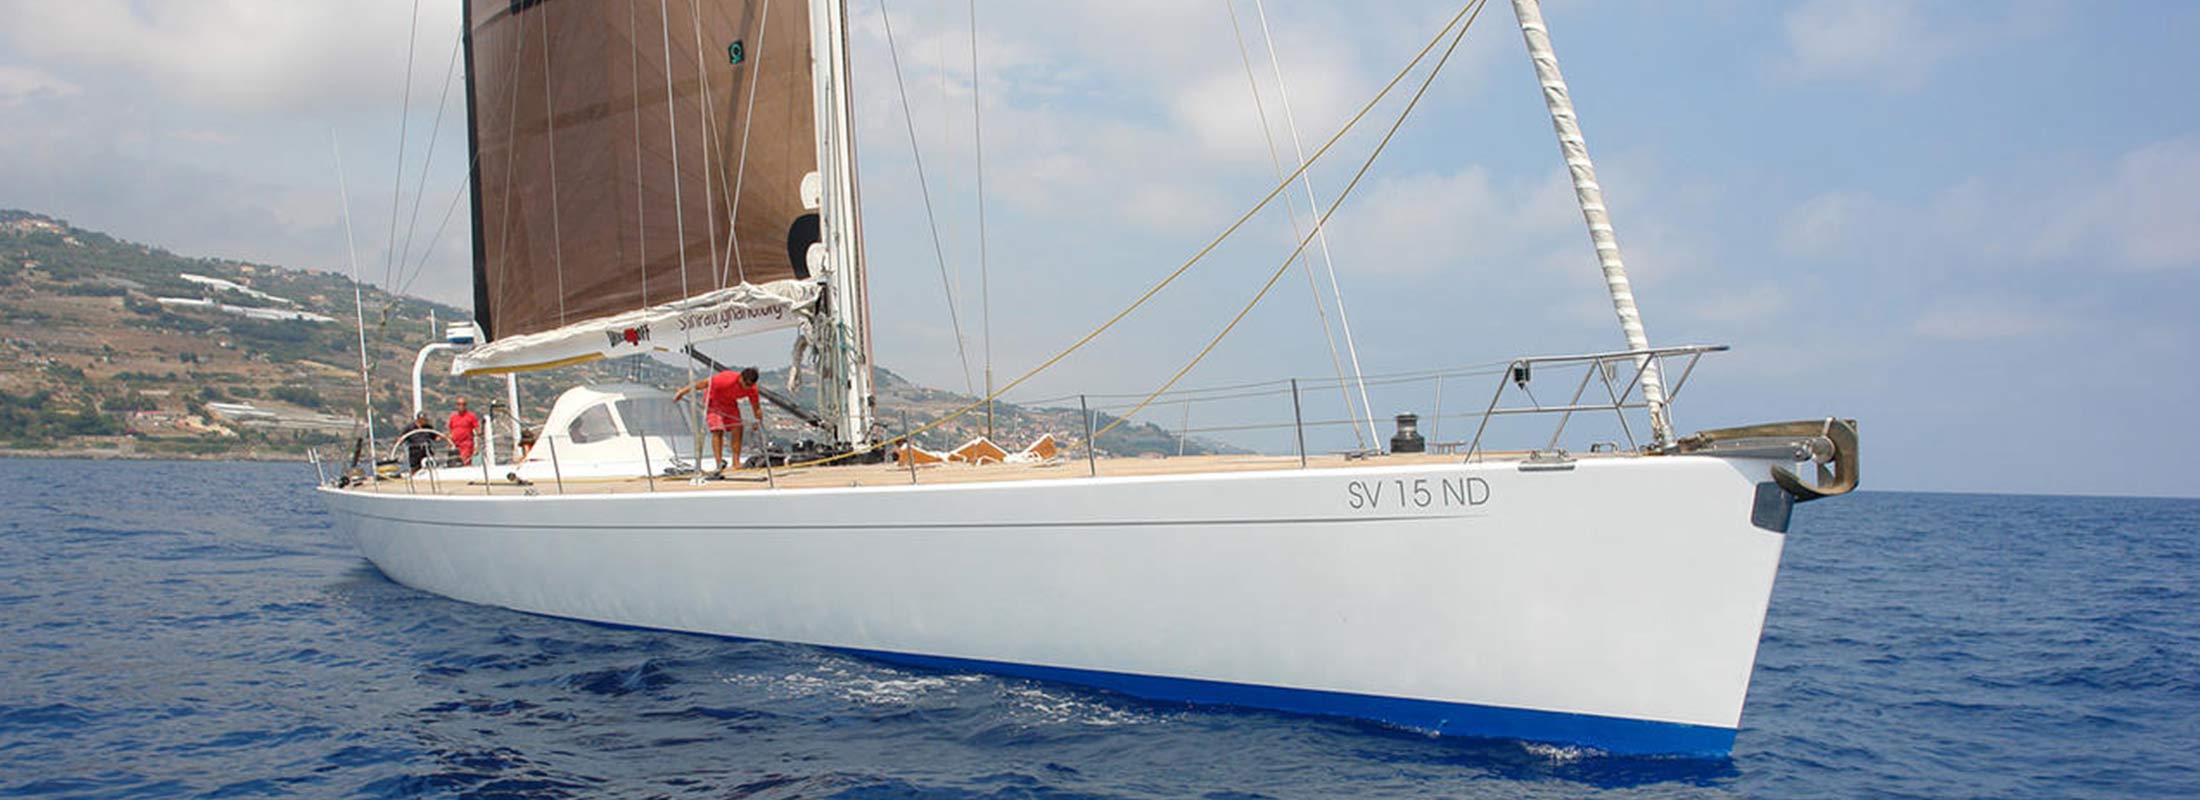 Quinta Santa Maria Sailing Yacht for Charter Mediterranean slider 1